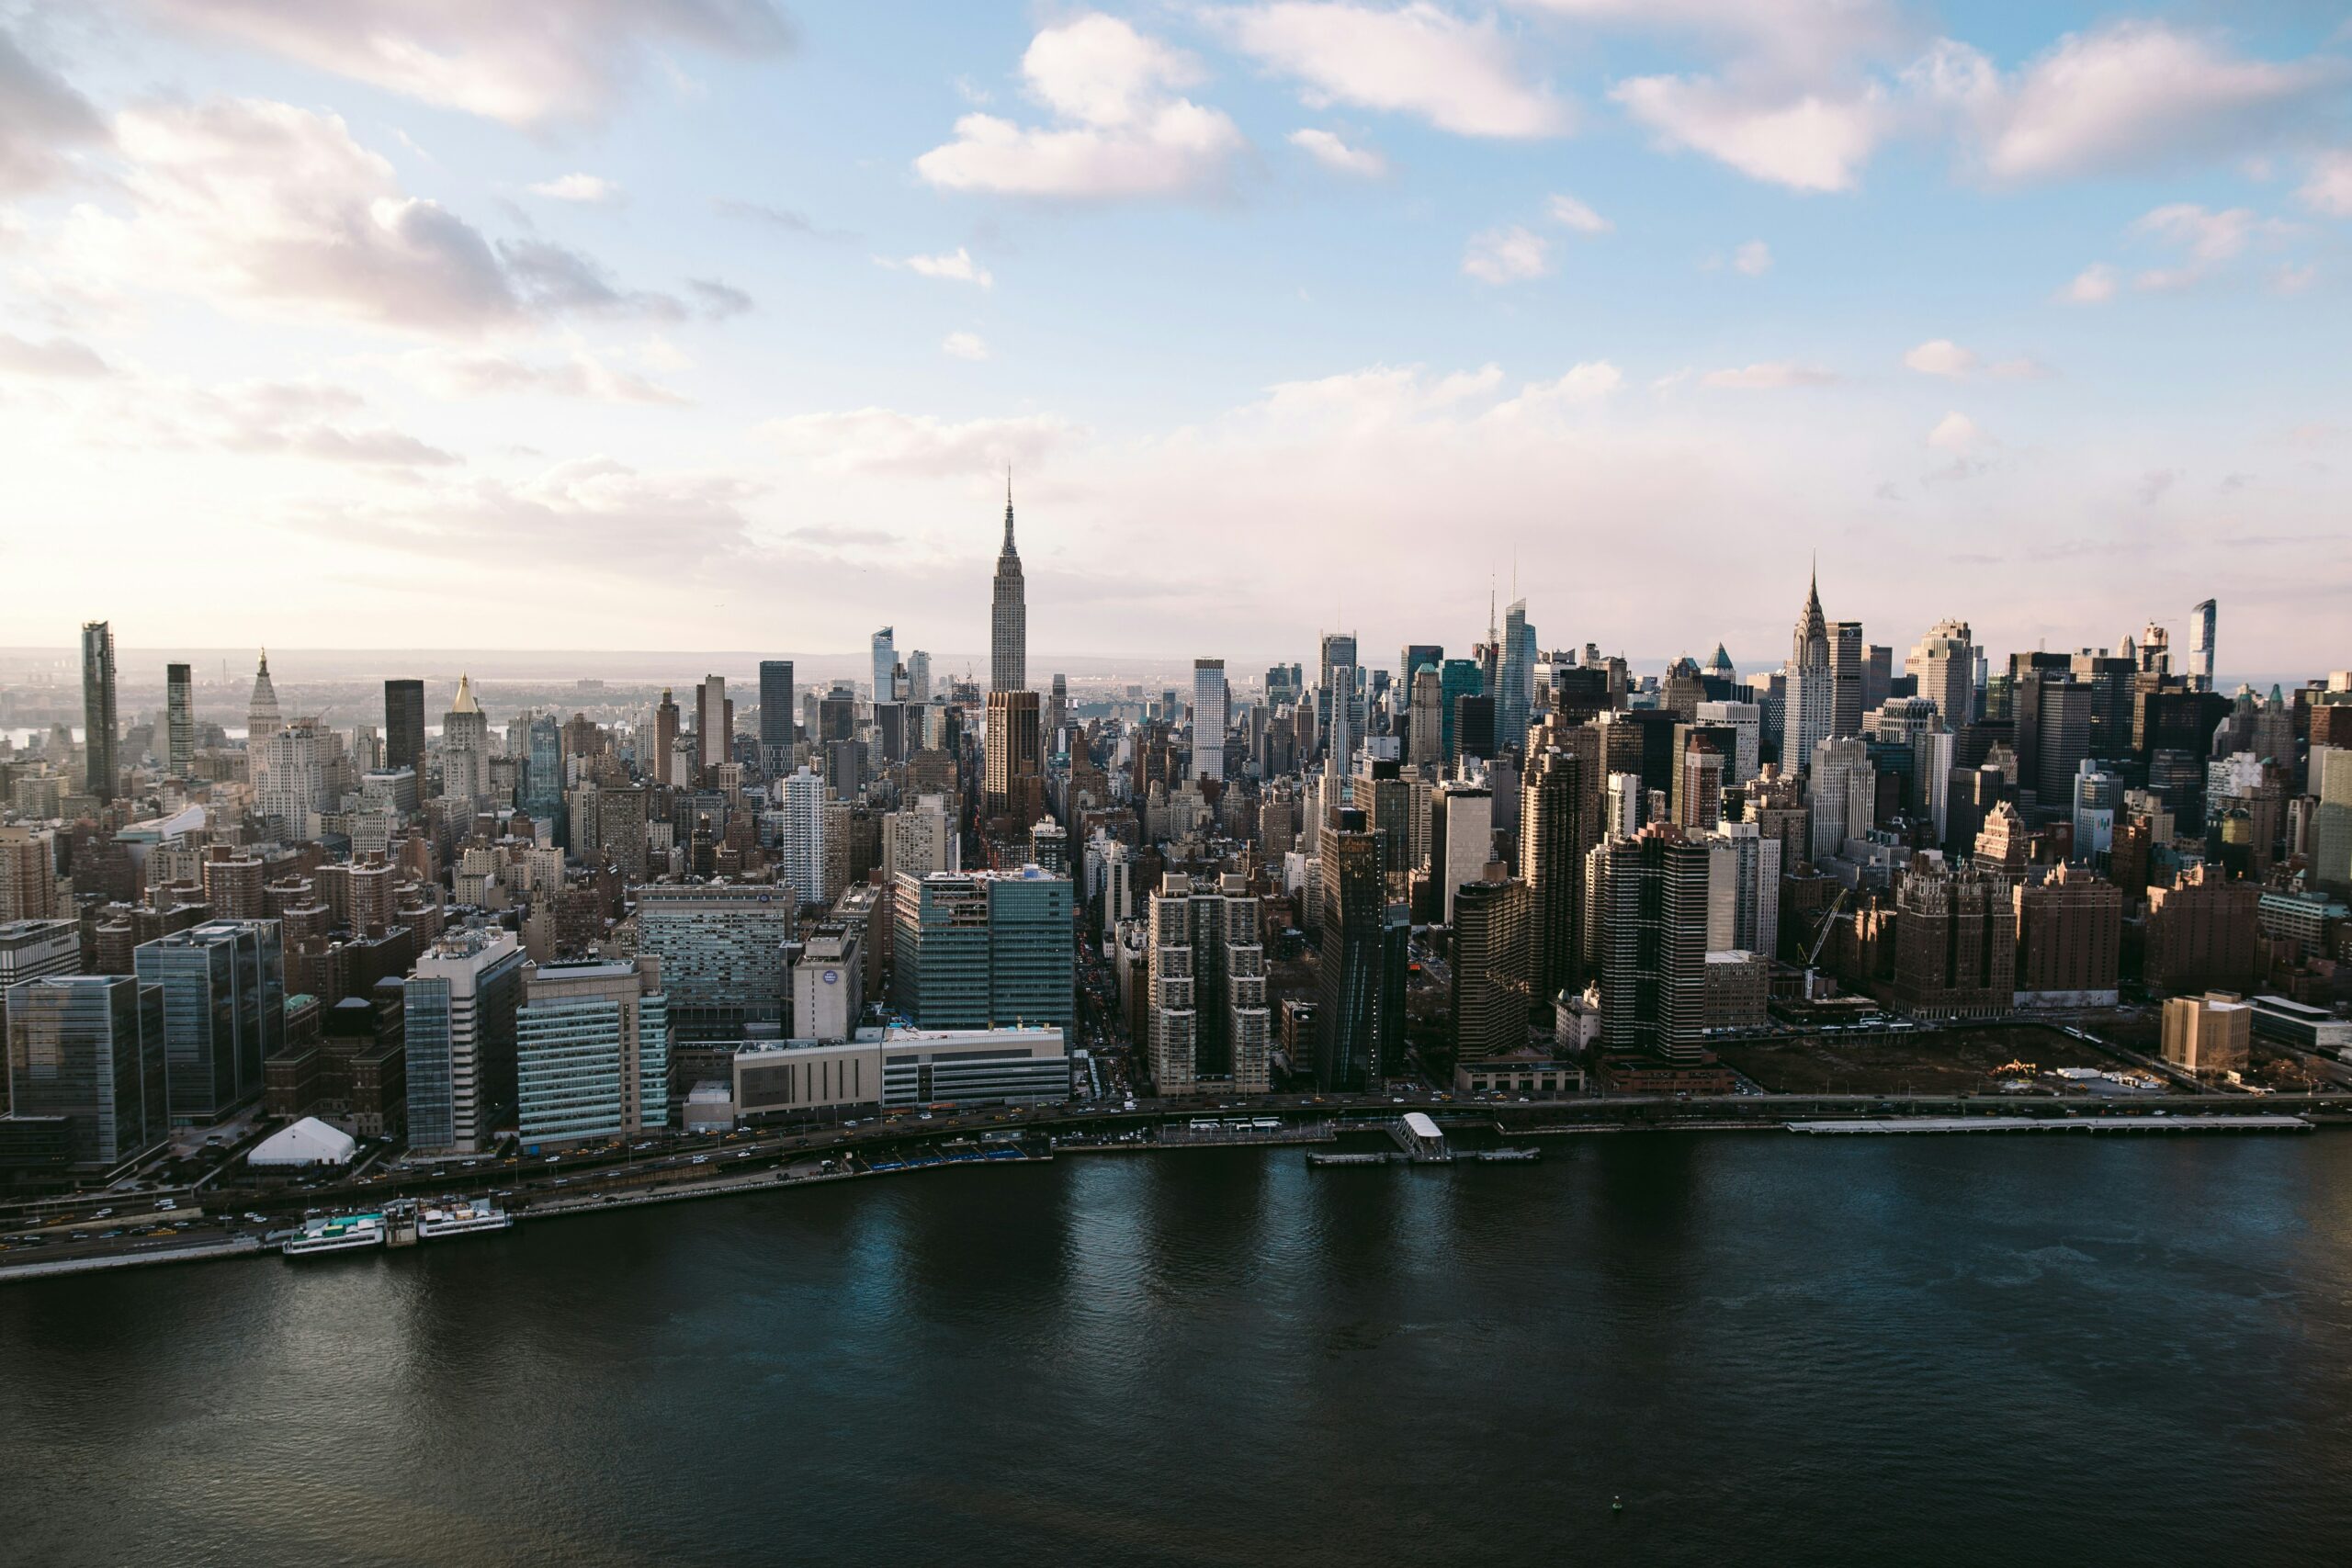 The Wall Street Journal: “How to Kill New York’s Rental Housing Market”